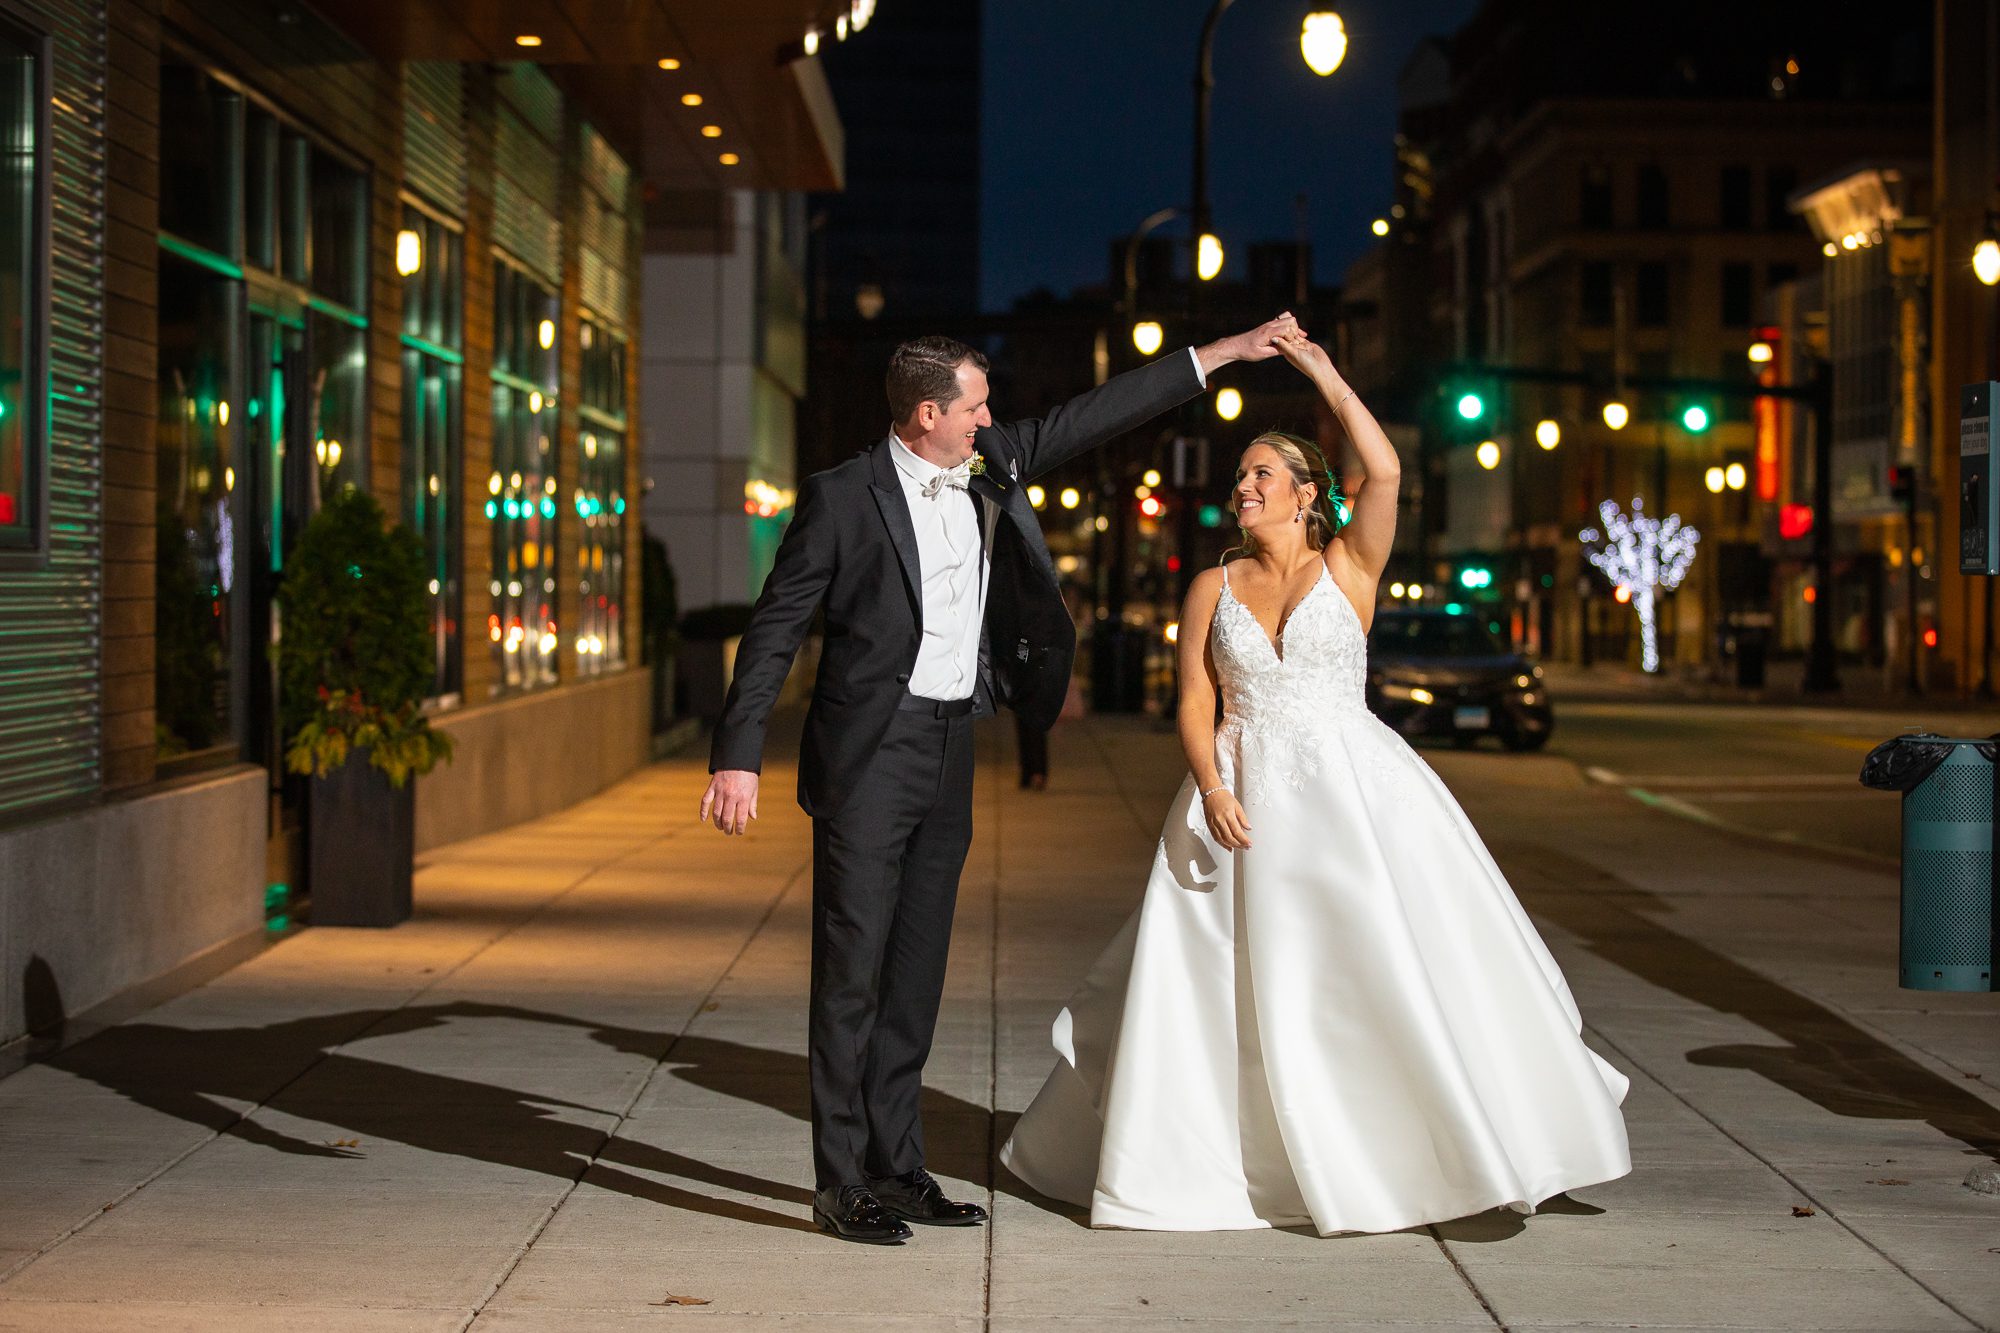 bride-groom-dance-sidewalk-at-night-worcester-ma